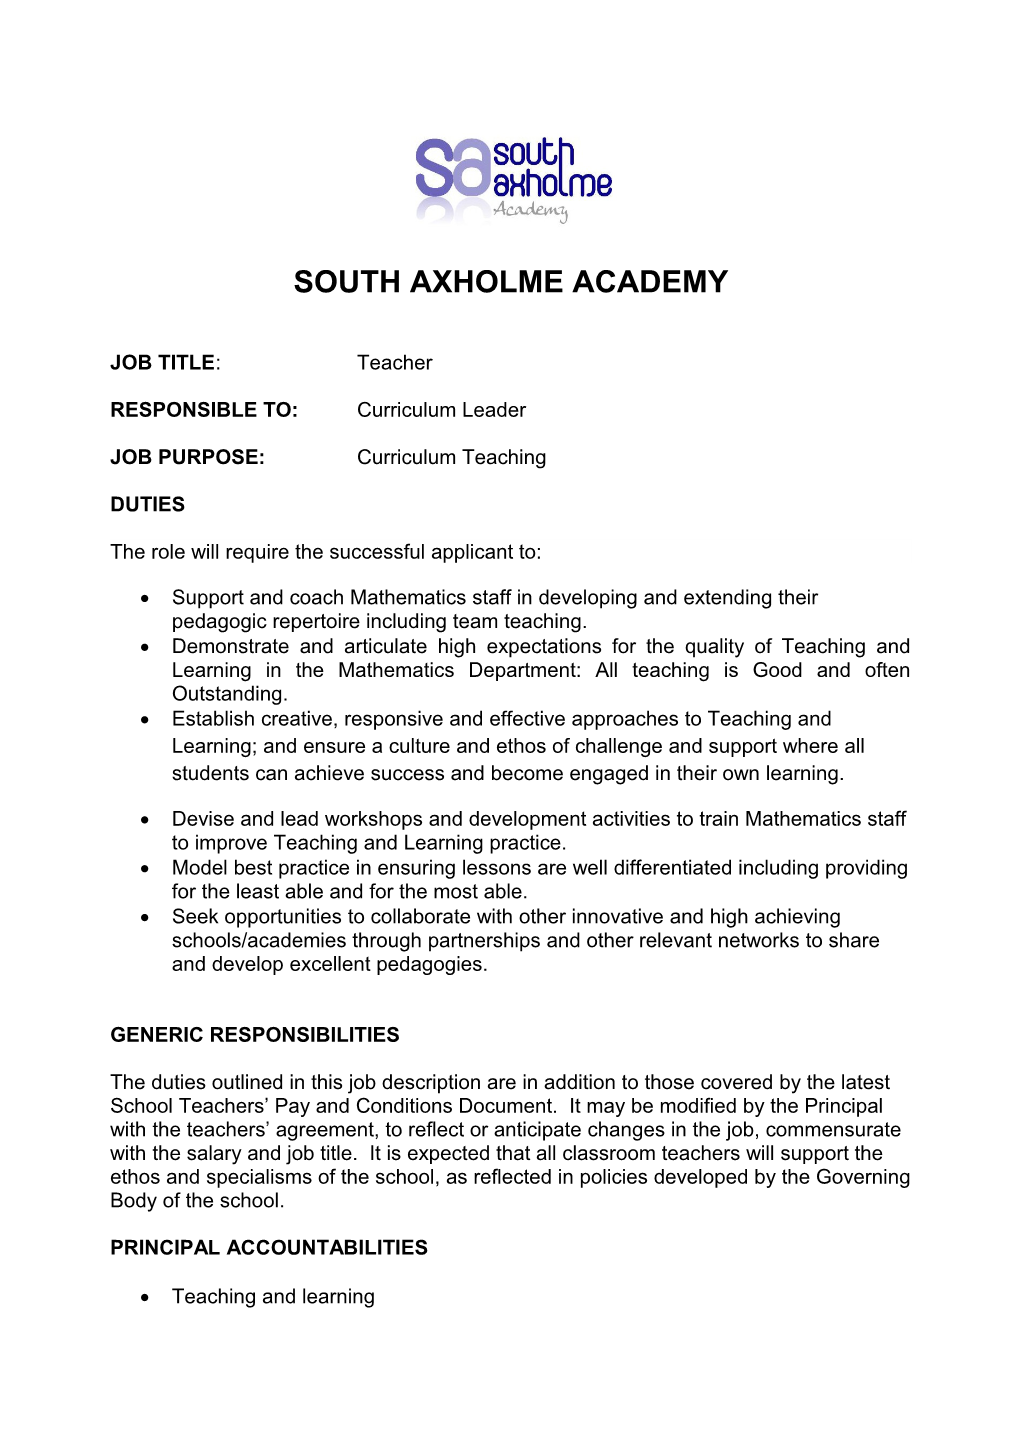 South Axholme Academy